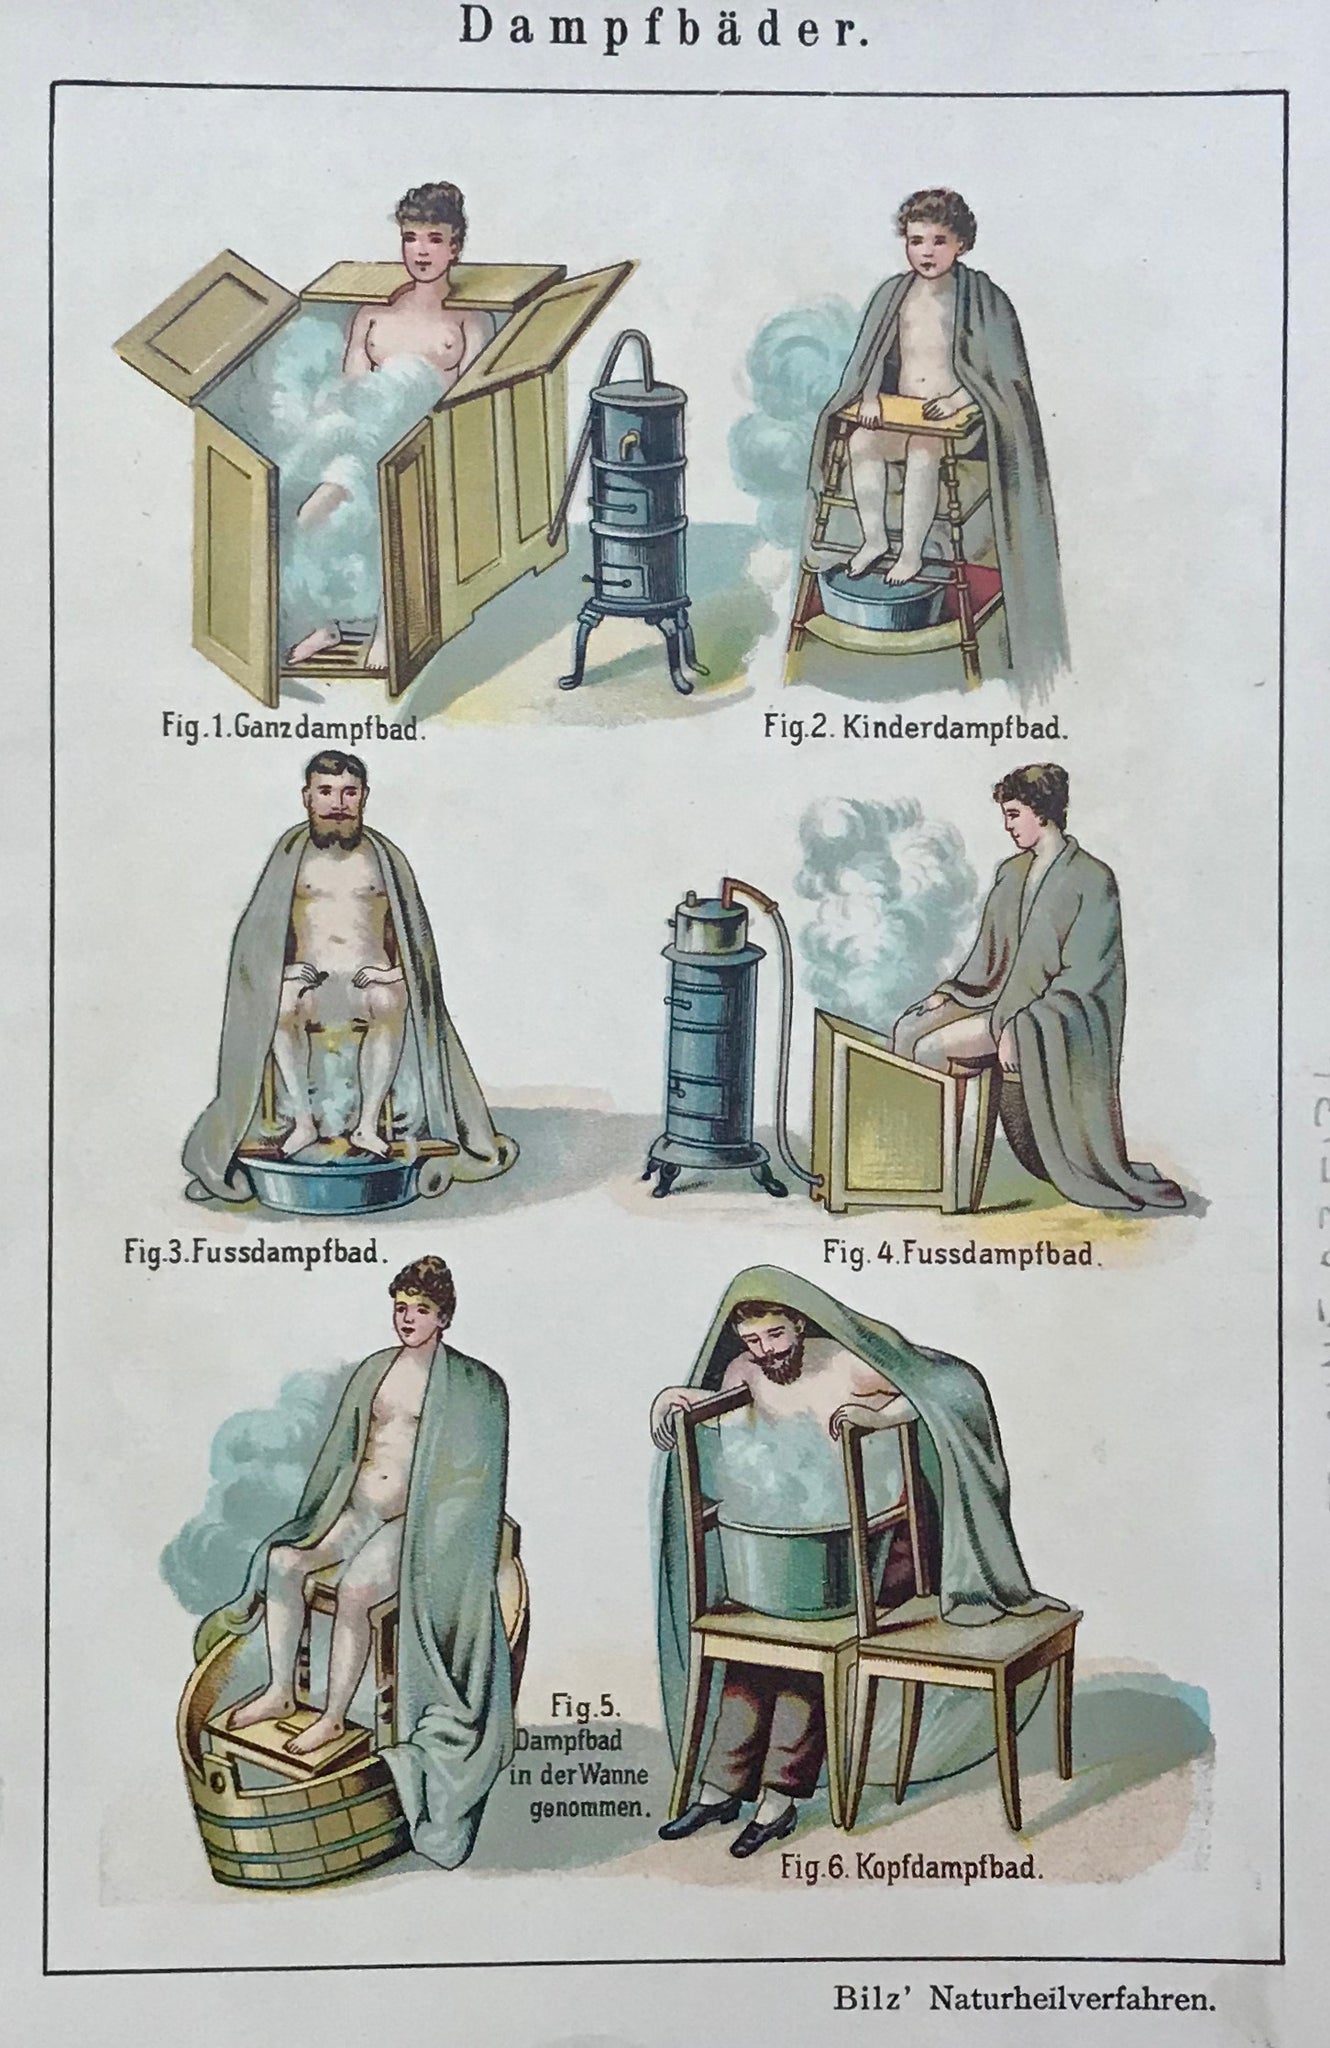 Dampfbaeder (Steam Baths)  Chromolithograph ca 1875.